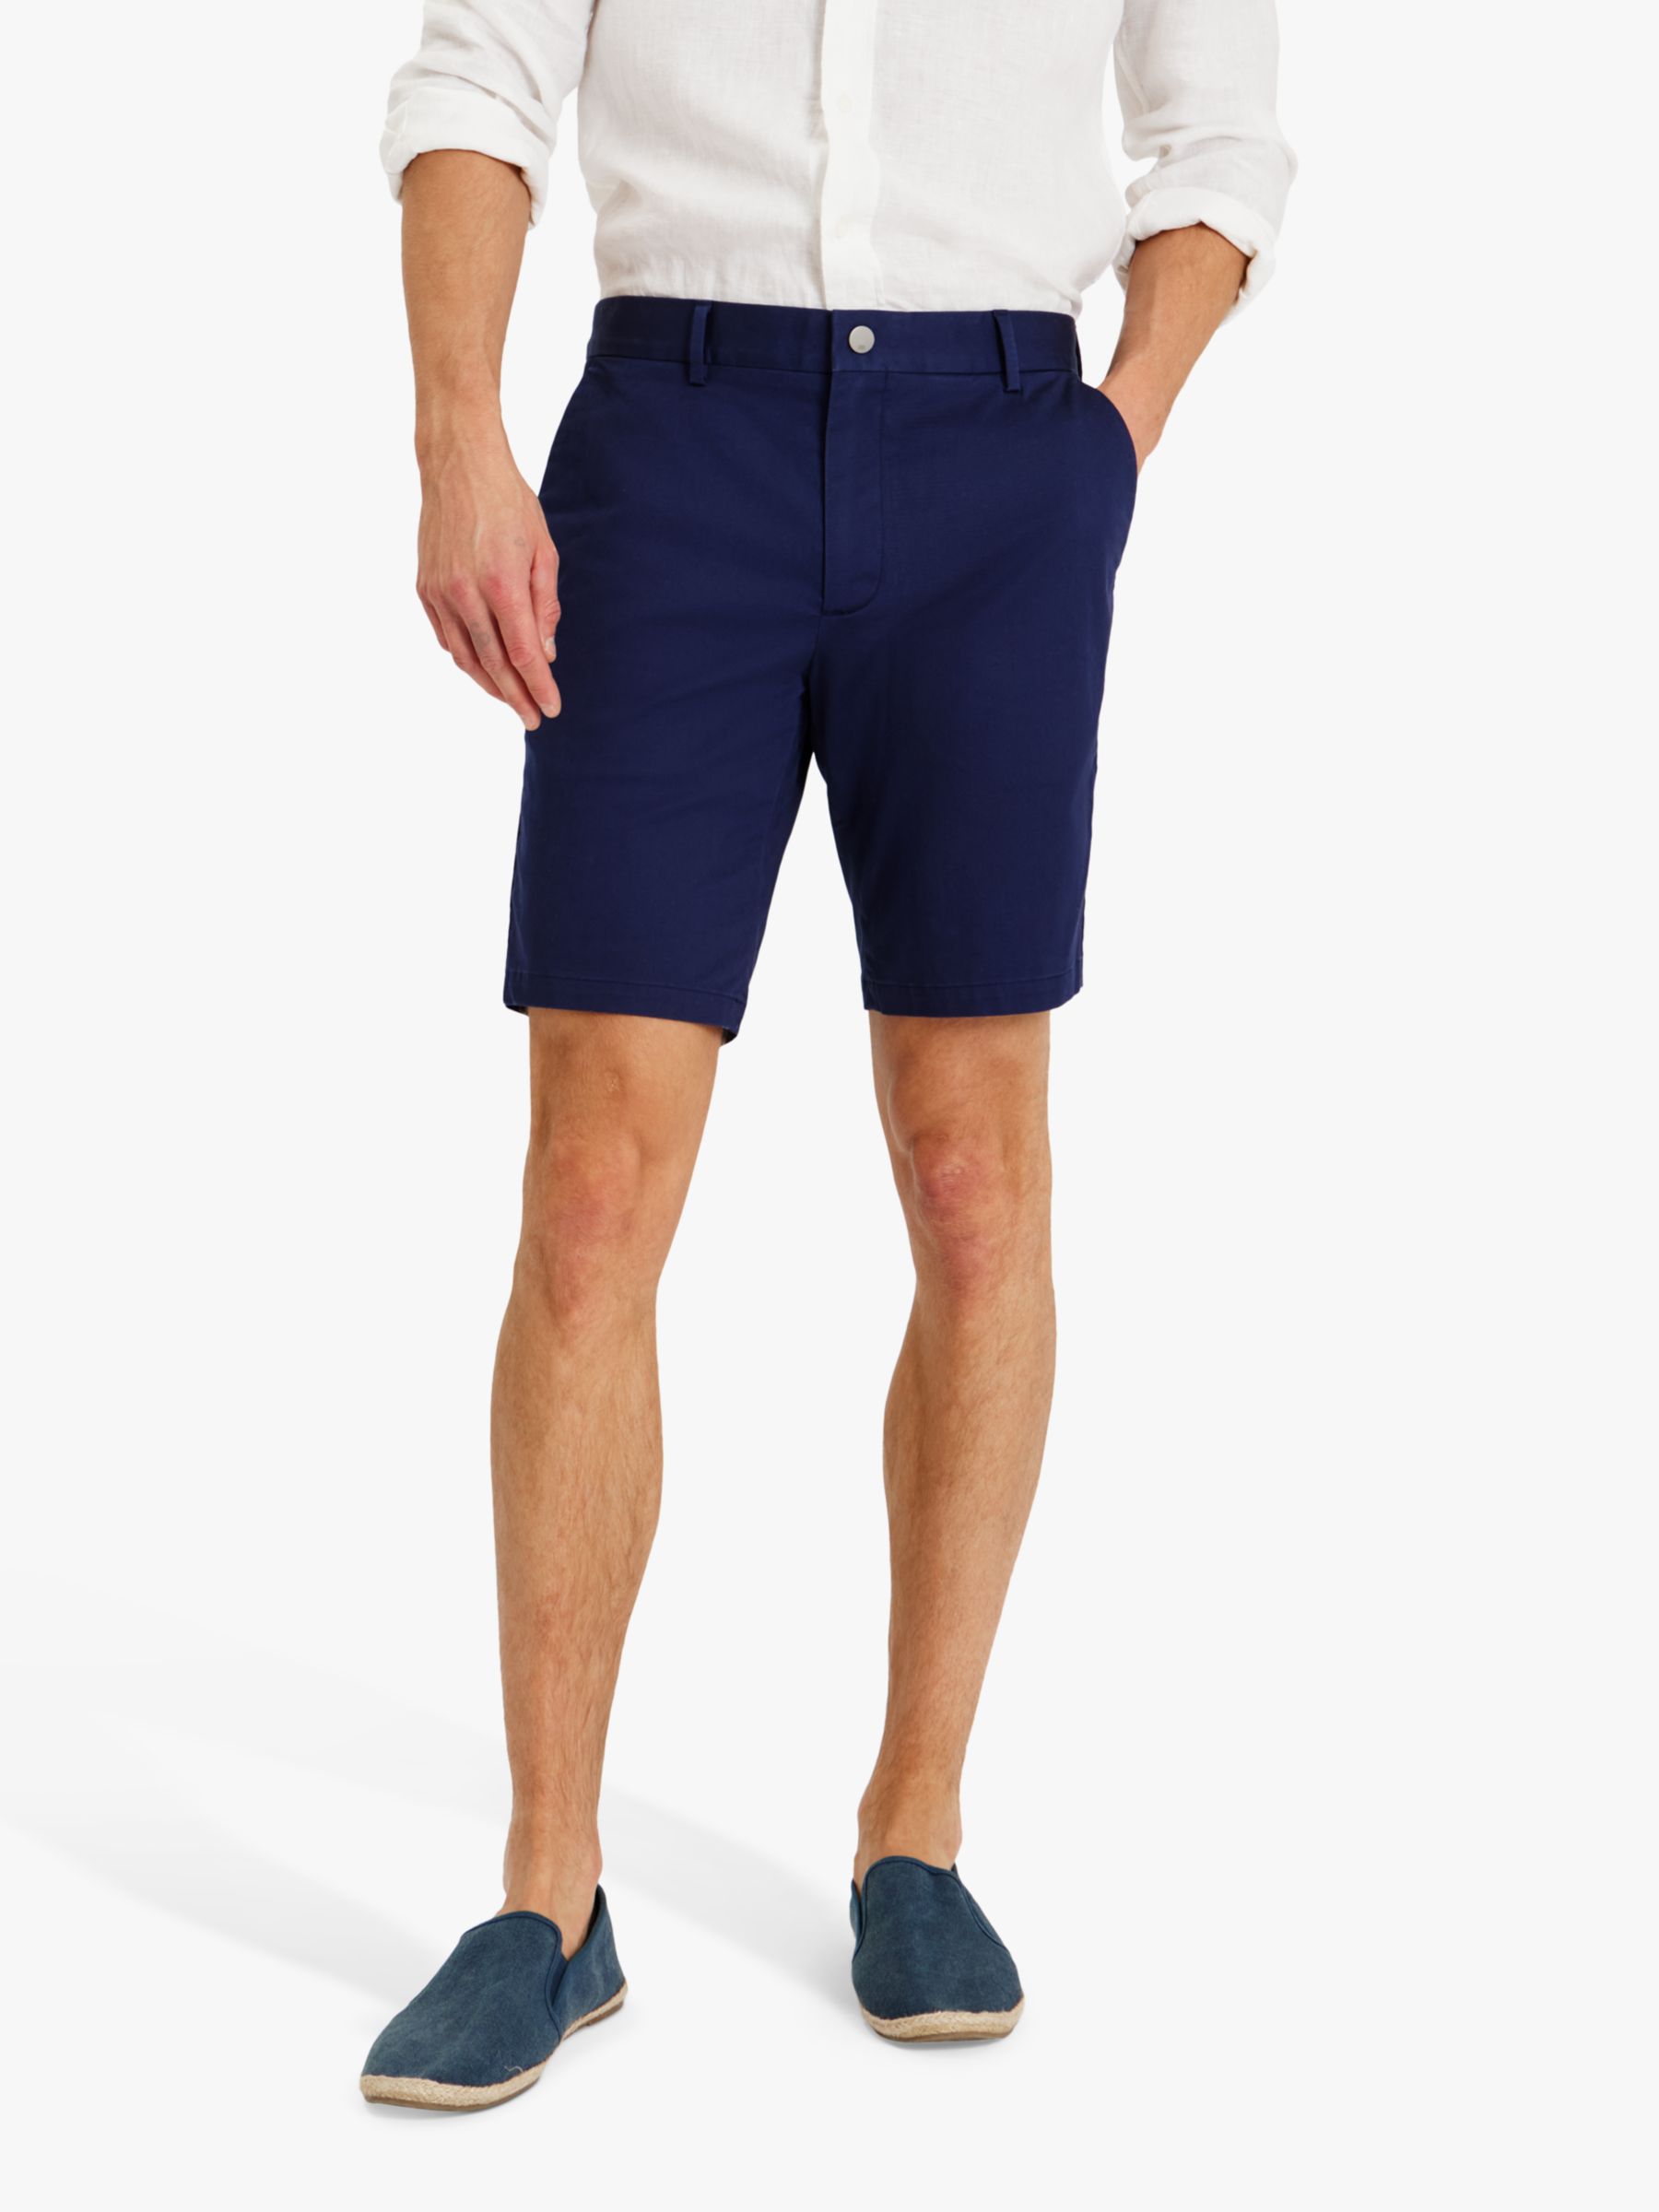 SPOKE Sharps Cotton Blend Regular Thigh Shorts, Navy, 28S